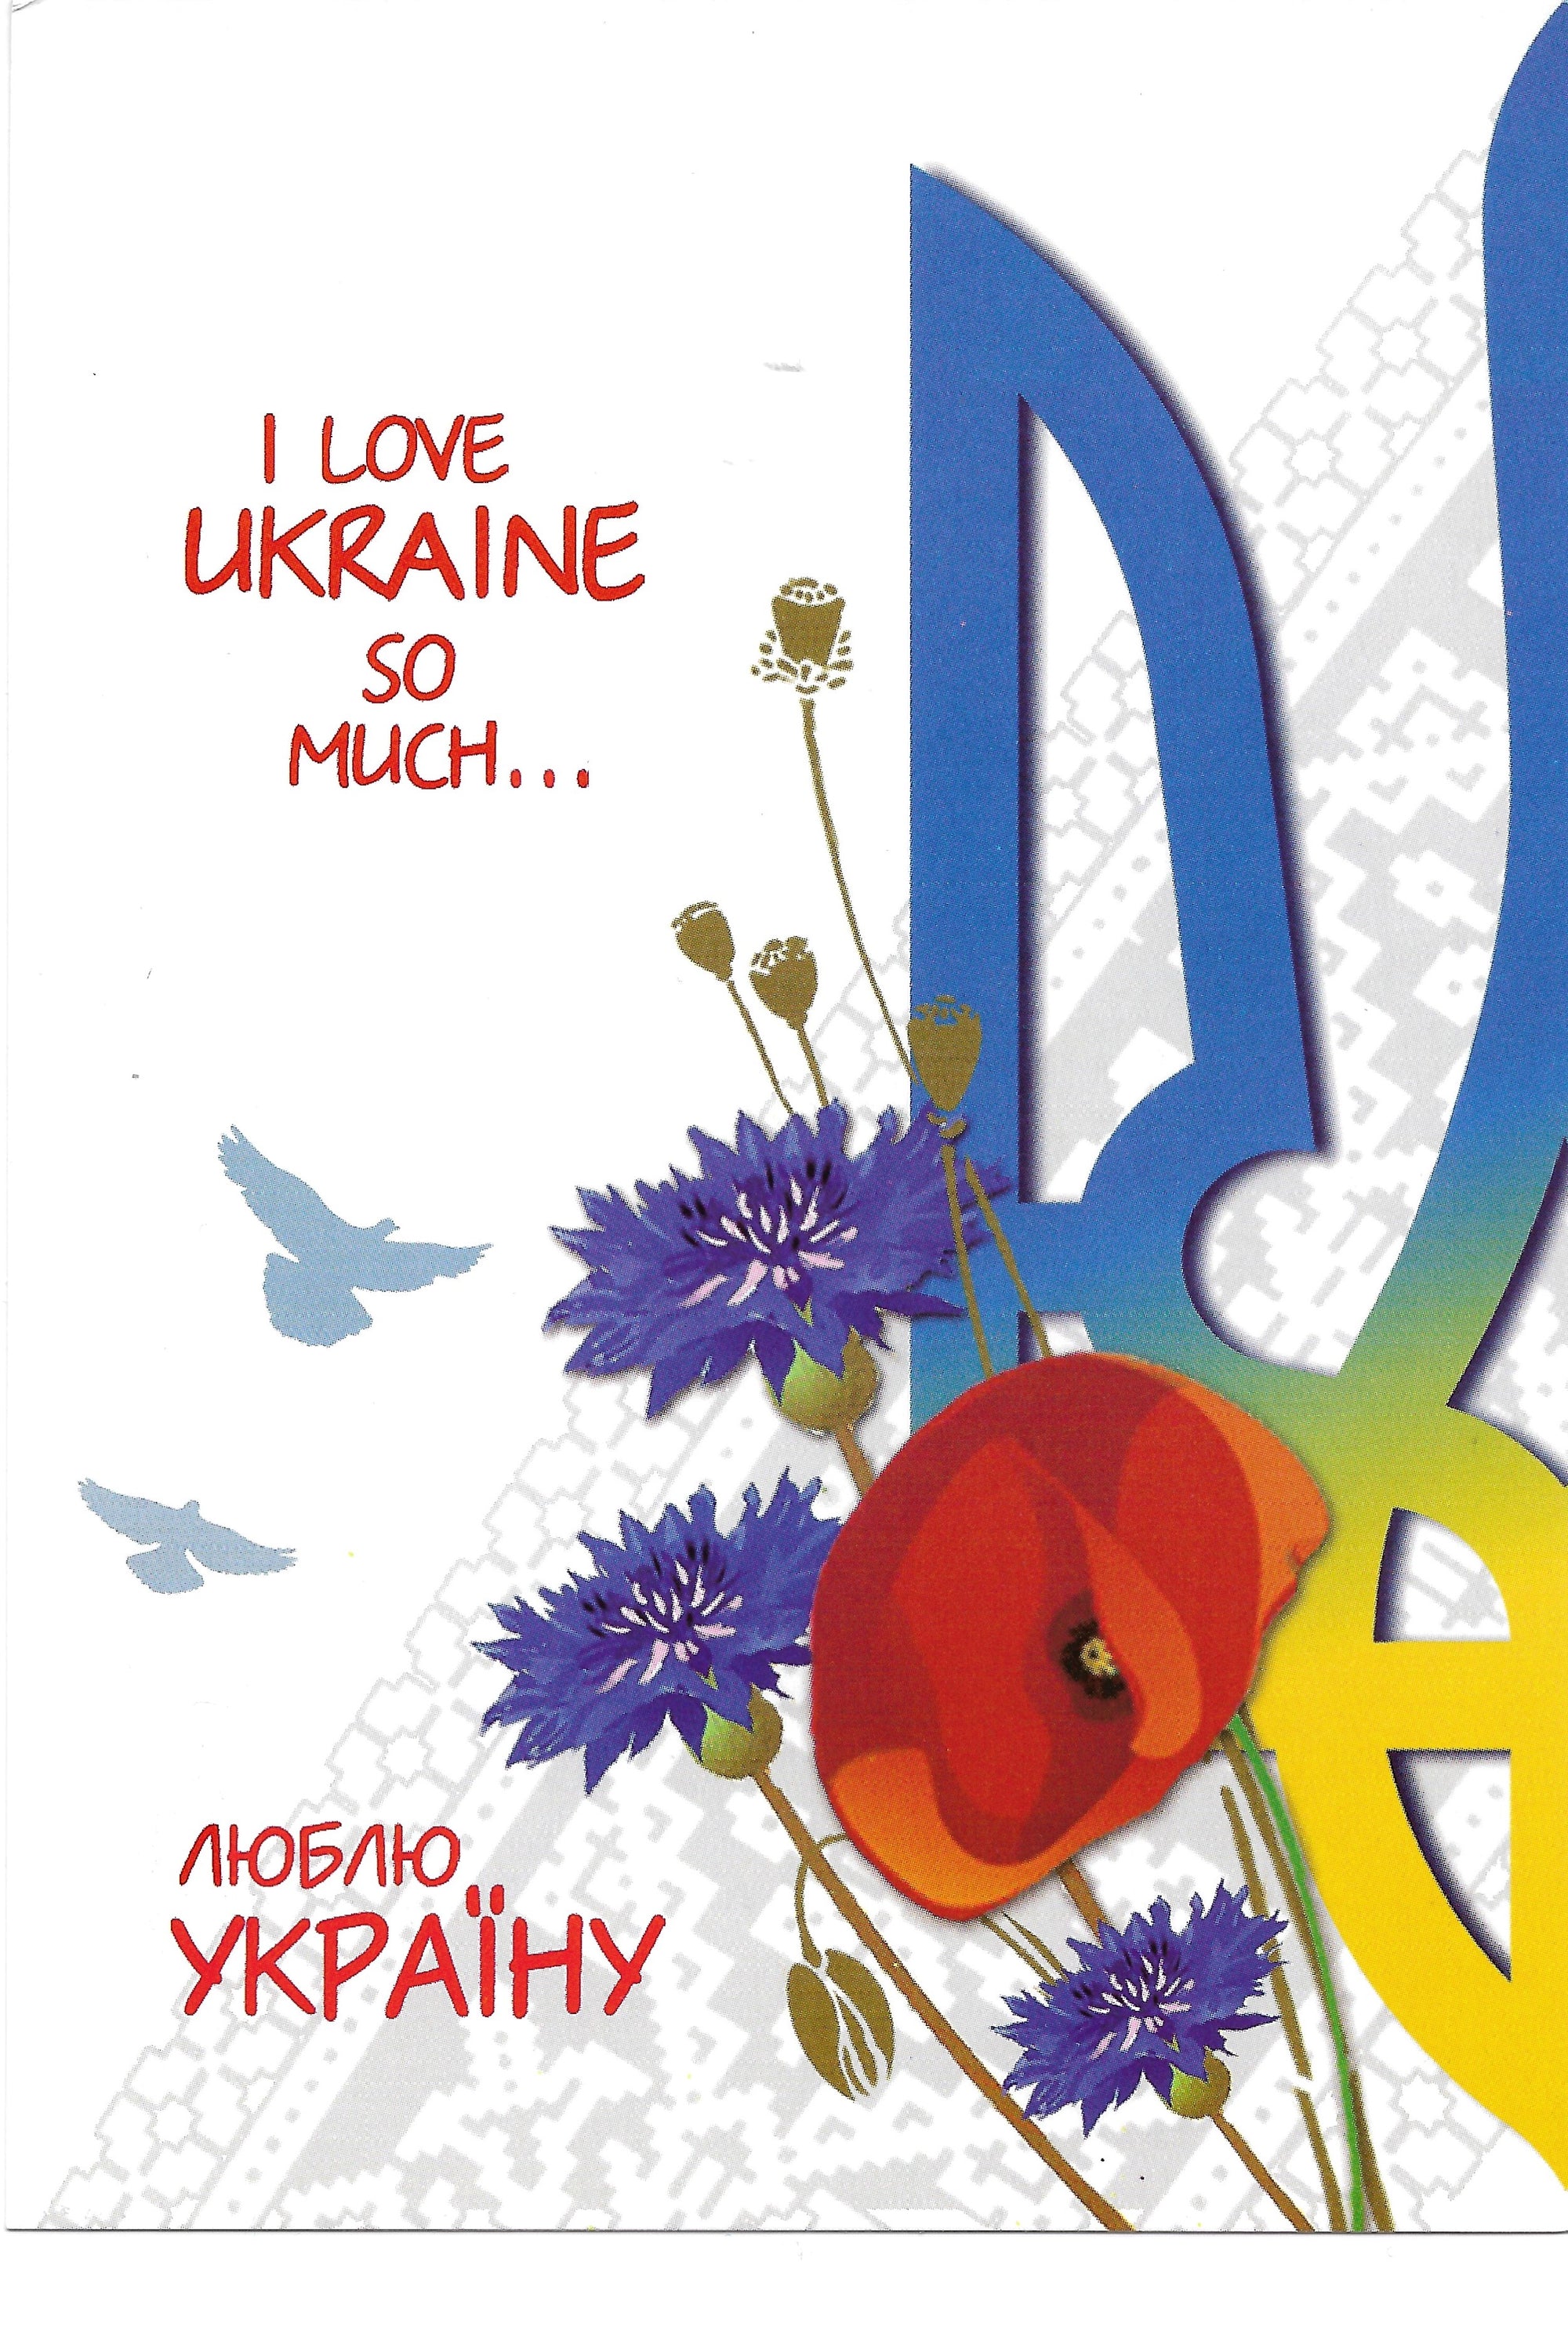 Greeting card "I love Ukraine so much"